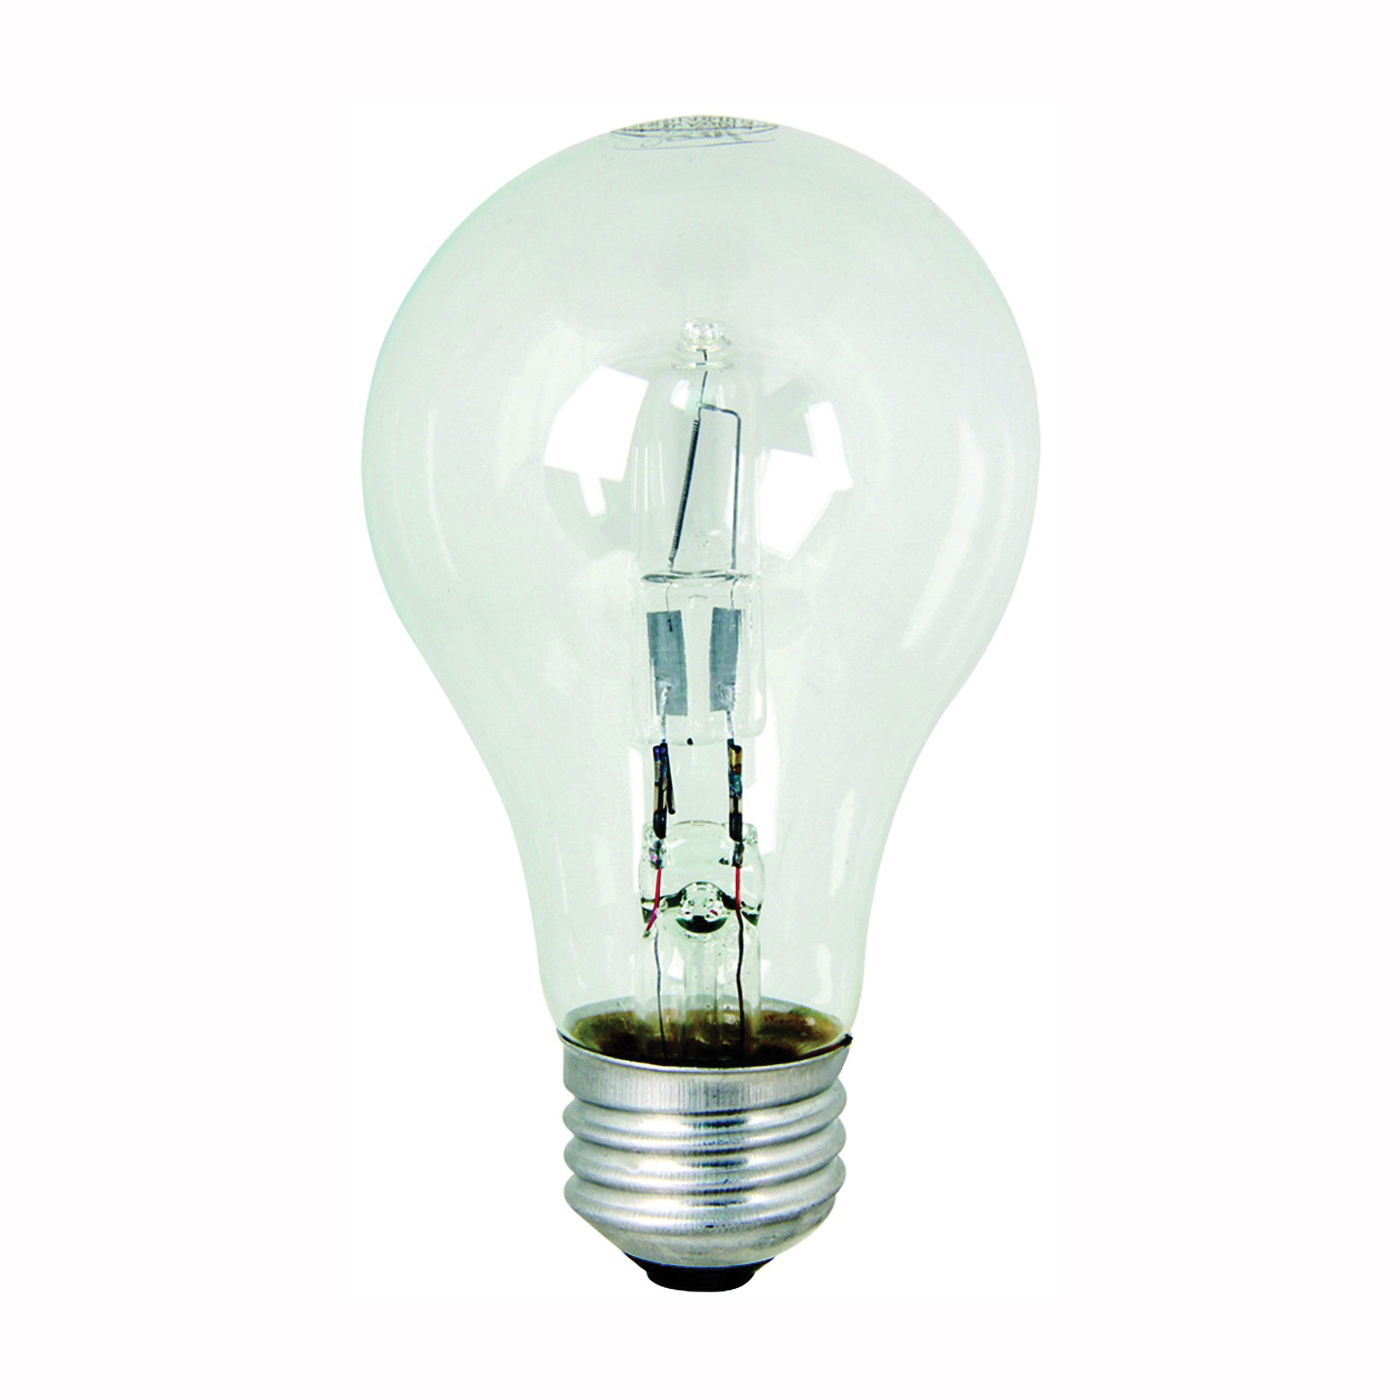 Q53A/CL/2 Halogen Bulb, 53 W, Medium E26 Lamp Base, A19 Lamp, Soft White Light, 1050 Lumens